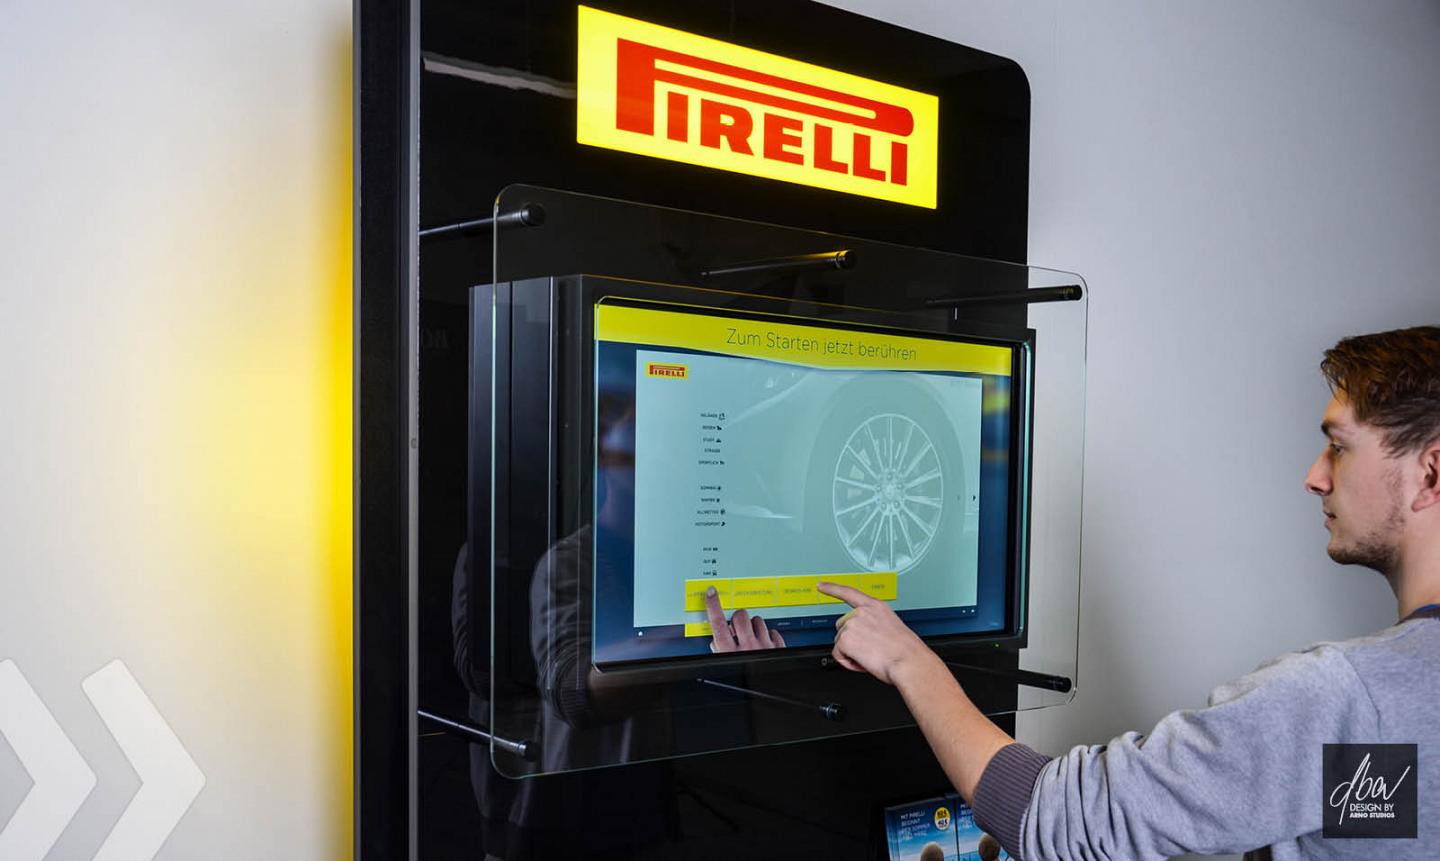 Interactive displays - example Pirelli